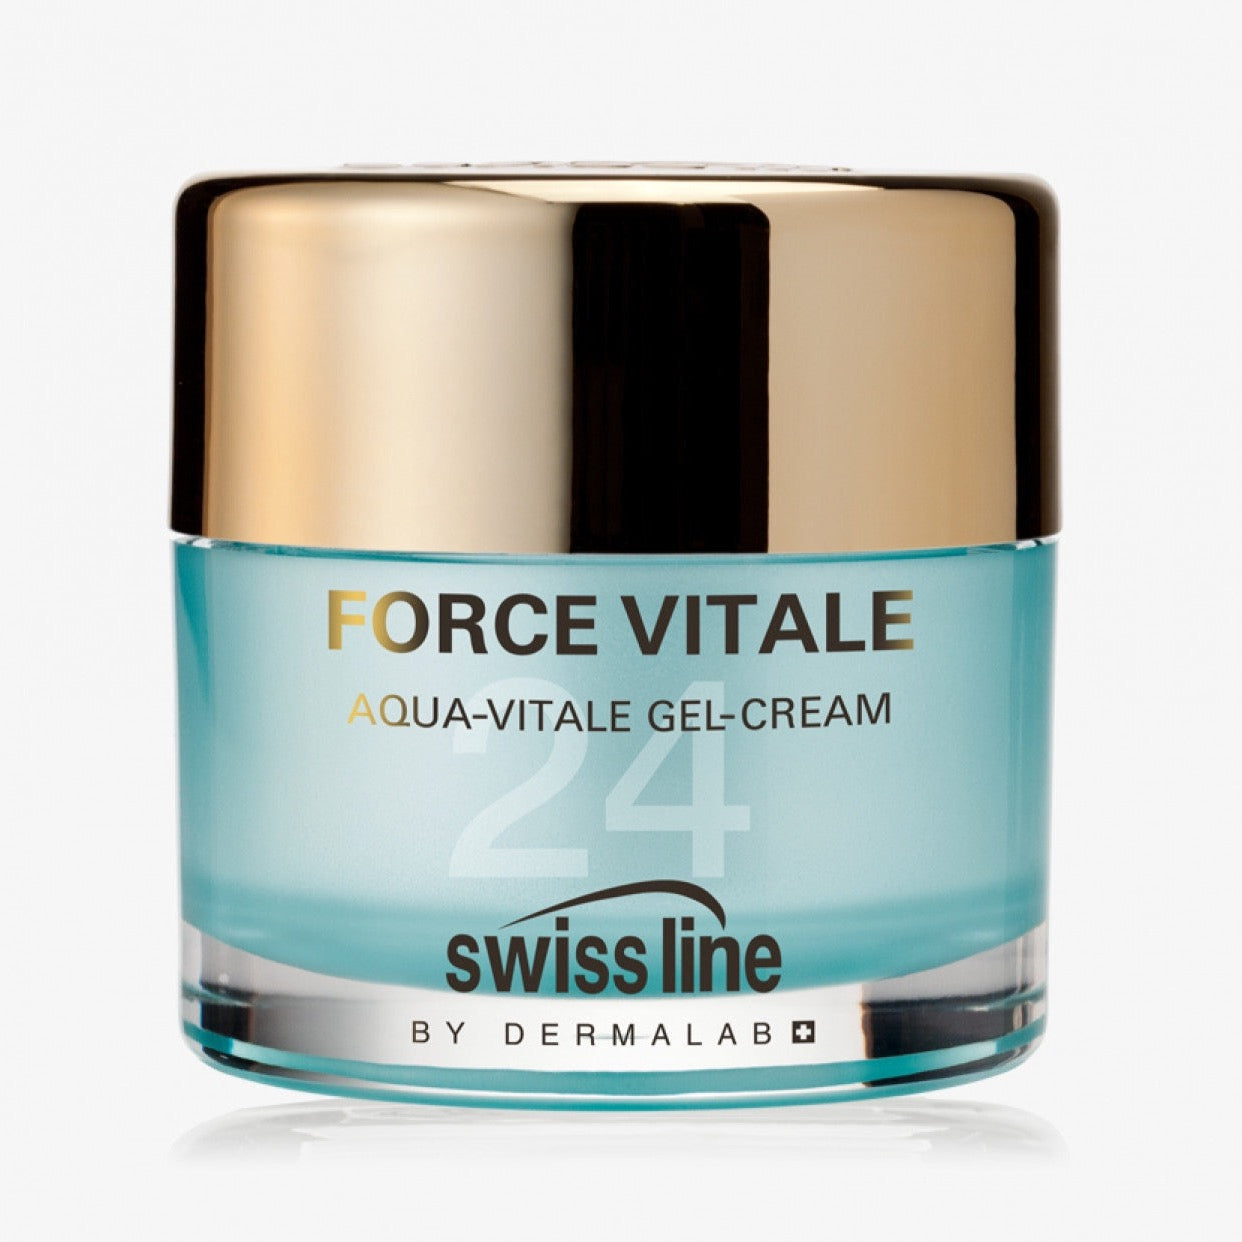 Village Wellness Spa - Swissline Force Vitale Aqua-Vitale Gel-Cream - Full Size 50ml